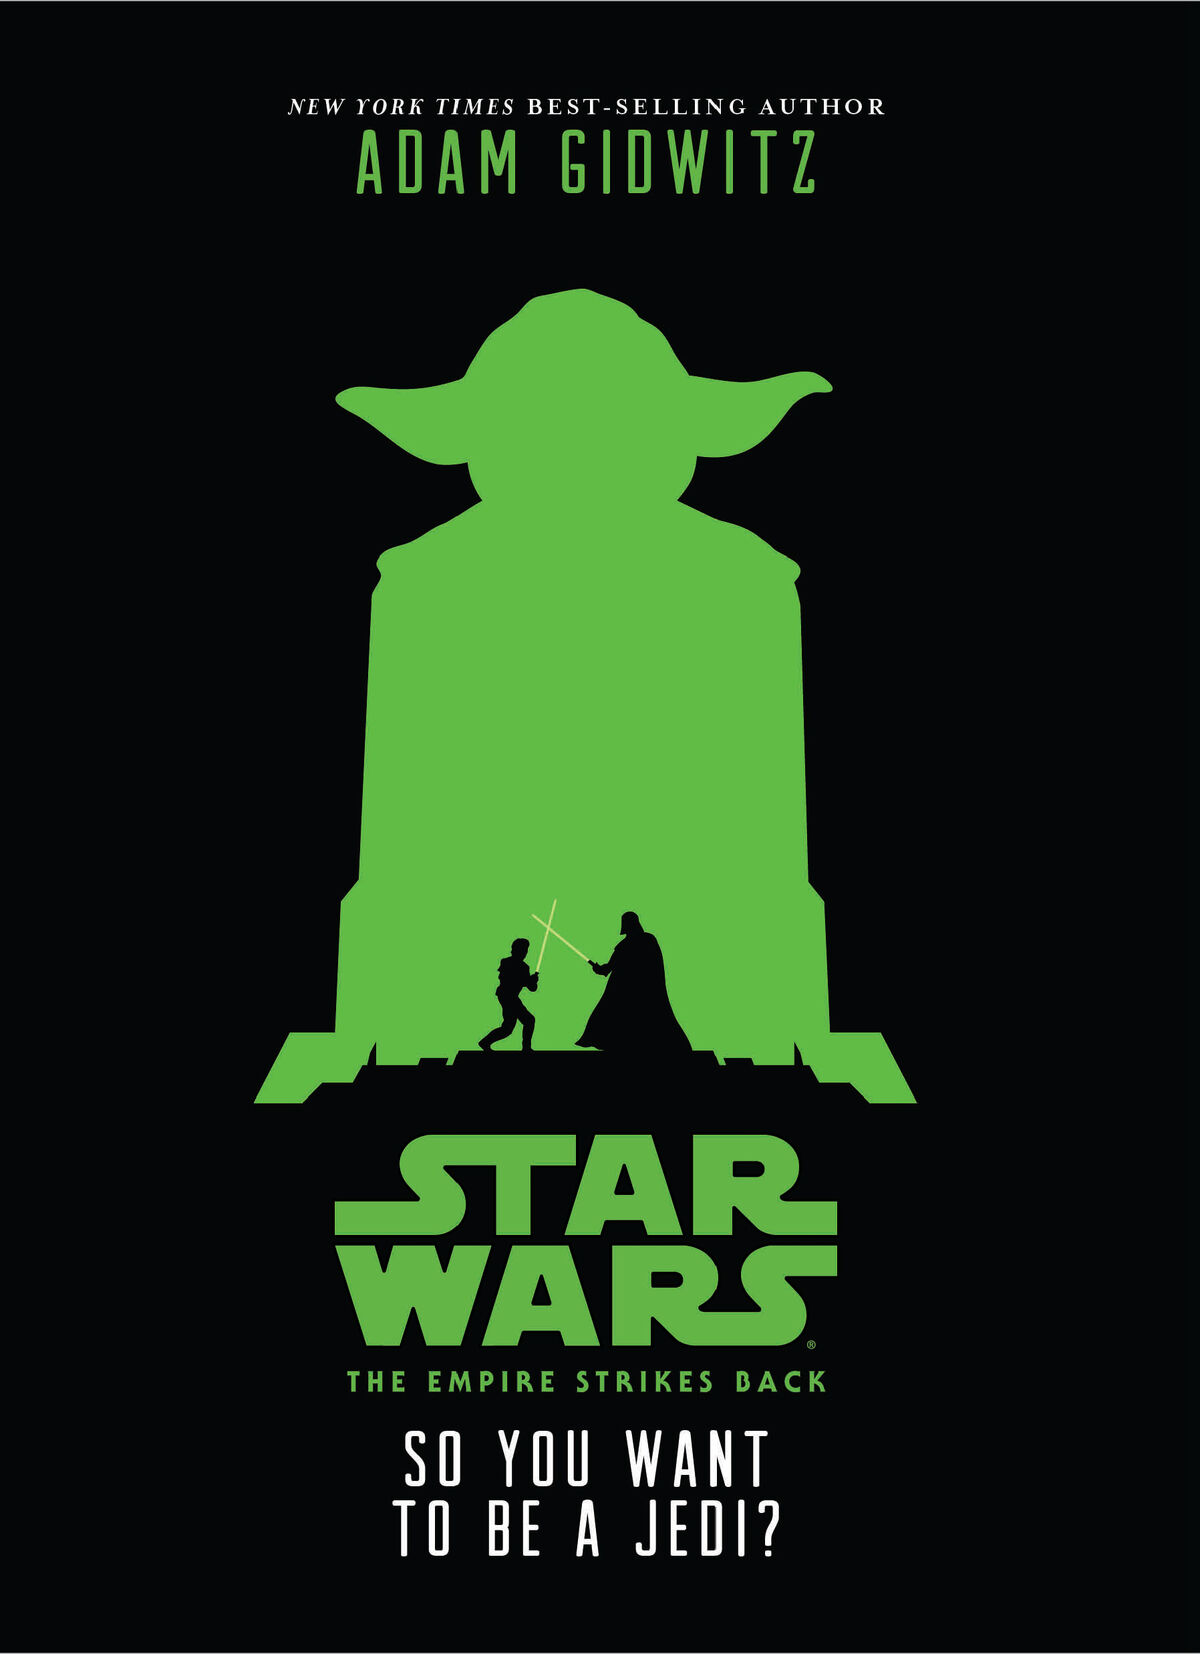 Star Wars Episode VIII: The Last Jedi Poster Image Refrigerator